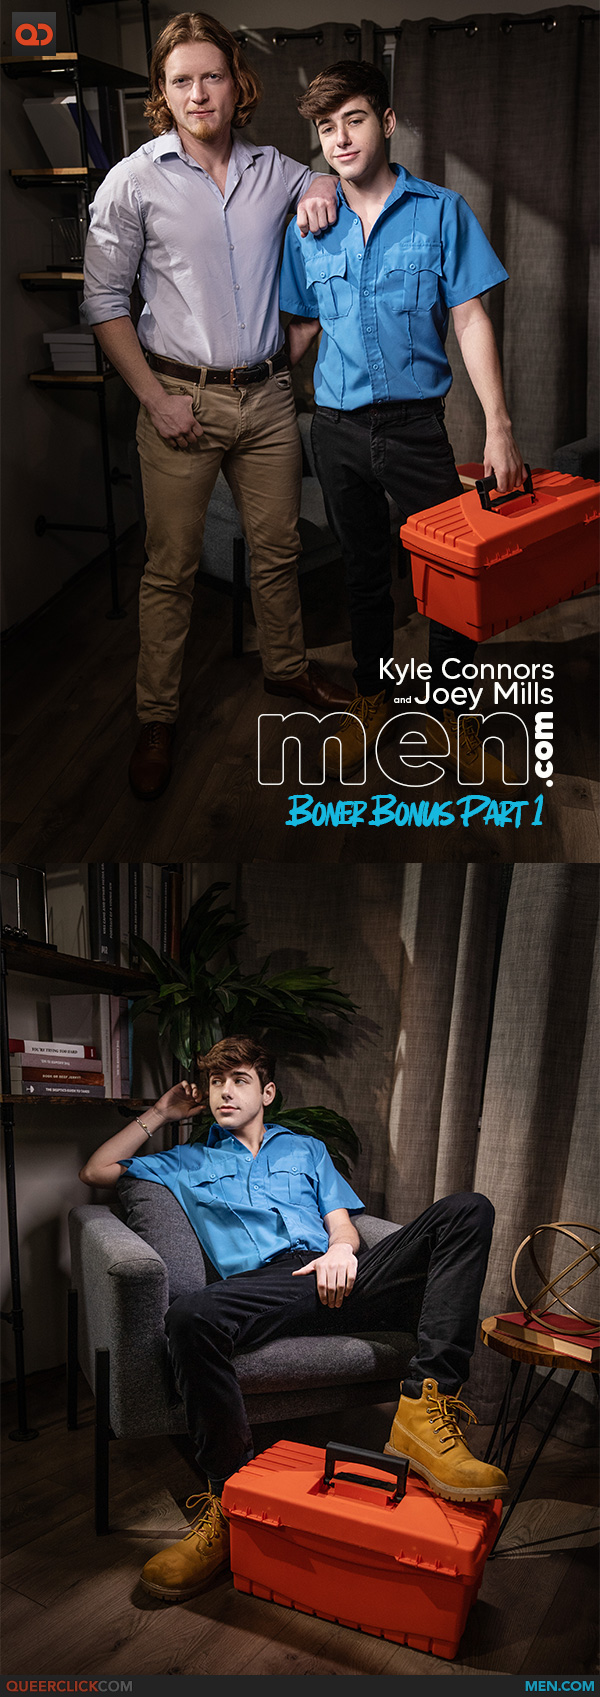 Men.com: Joey Mills and Kyle Connors - Boner Bonus Part 1